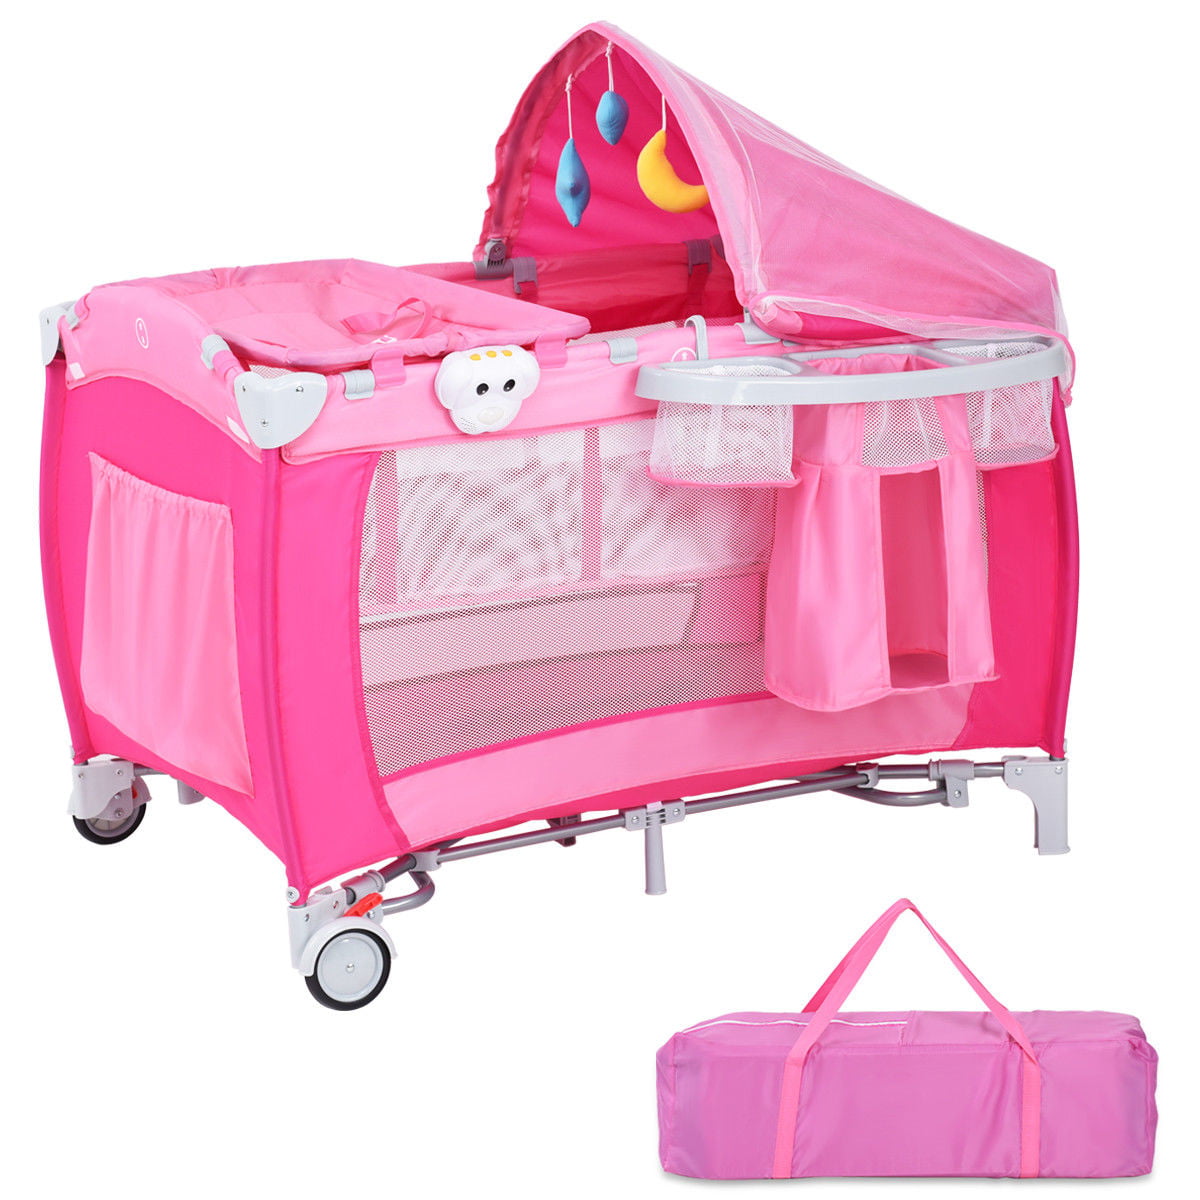 Baby Folding Oxford Cot Bed Travel Playpen Hammock Holder Crib Portable HE